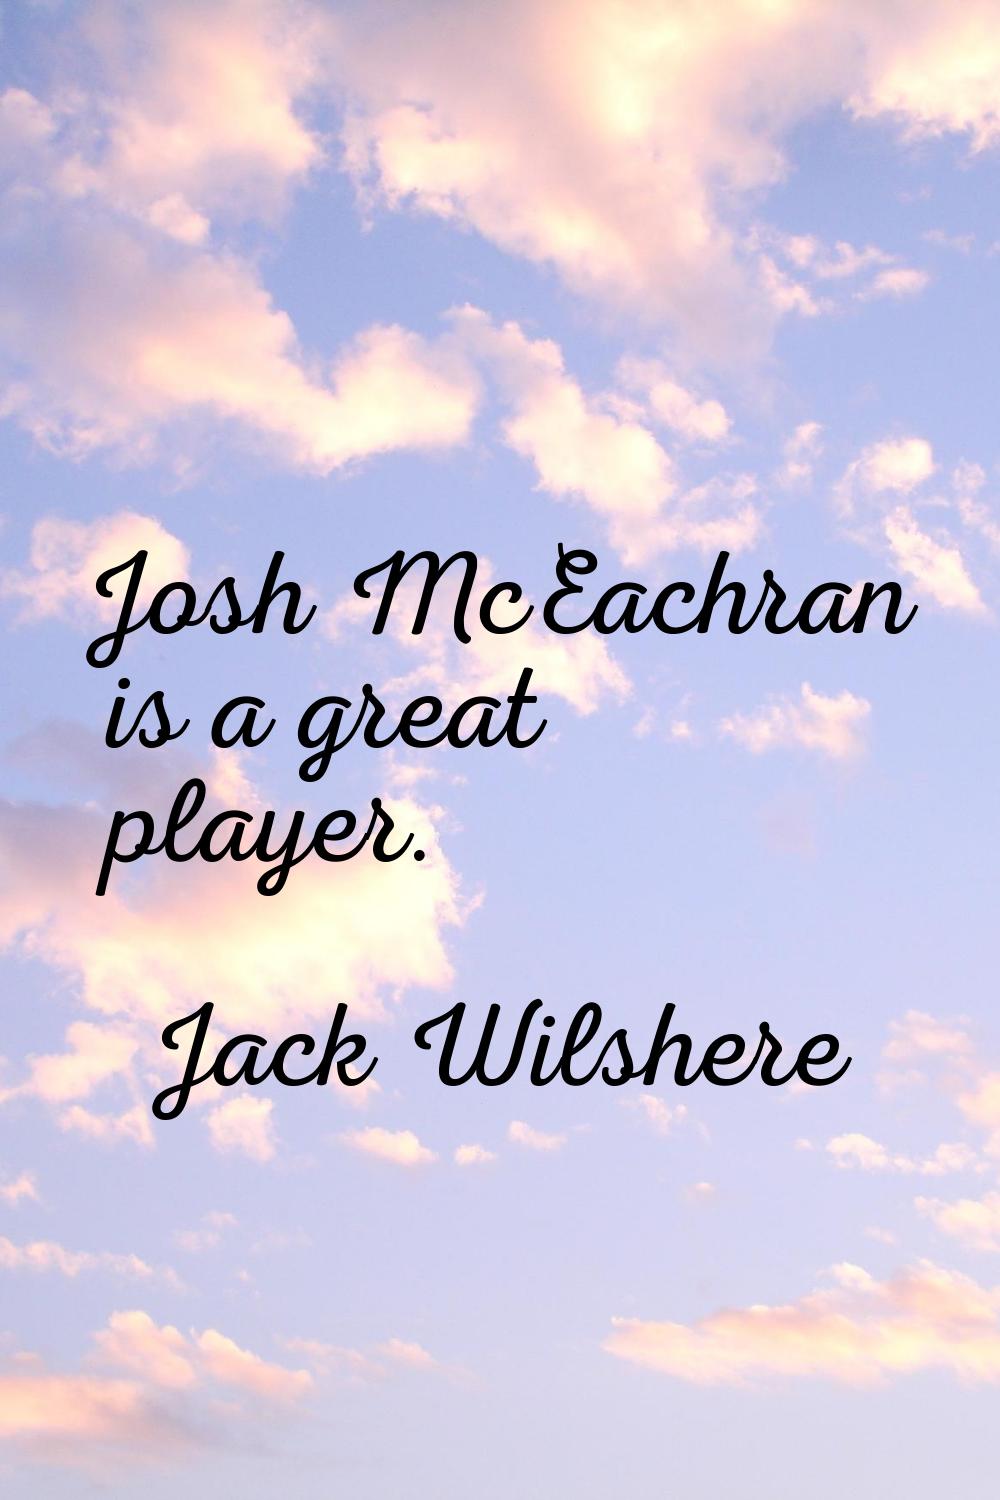 Josh McEachran is a great player.